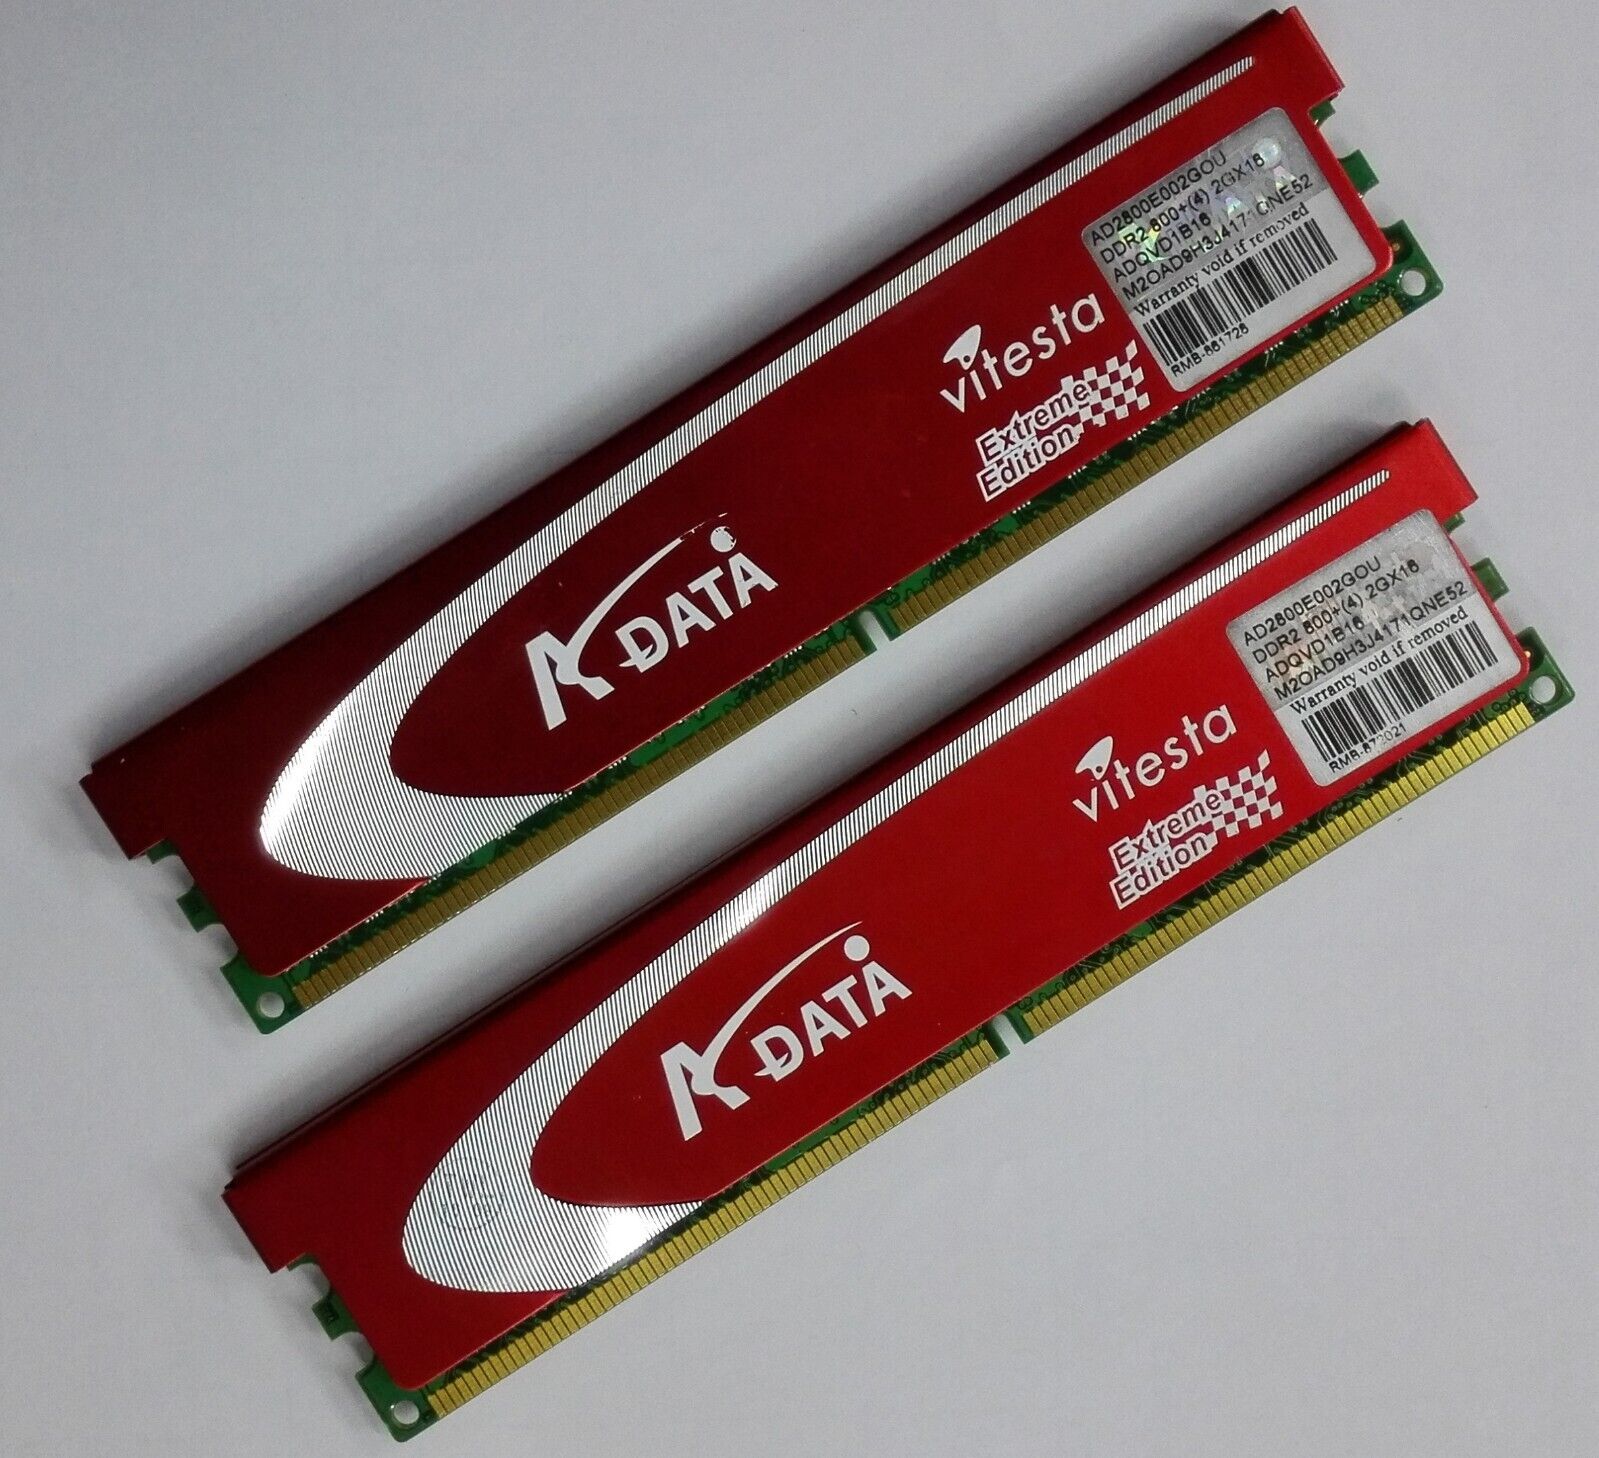 ADATA 4GB Kit /2 x 2GB DDR2 800+ Desktop Memory EXREME EDITION Dual-Channel CL-4